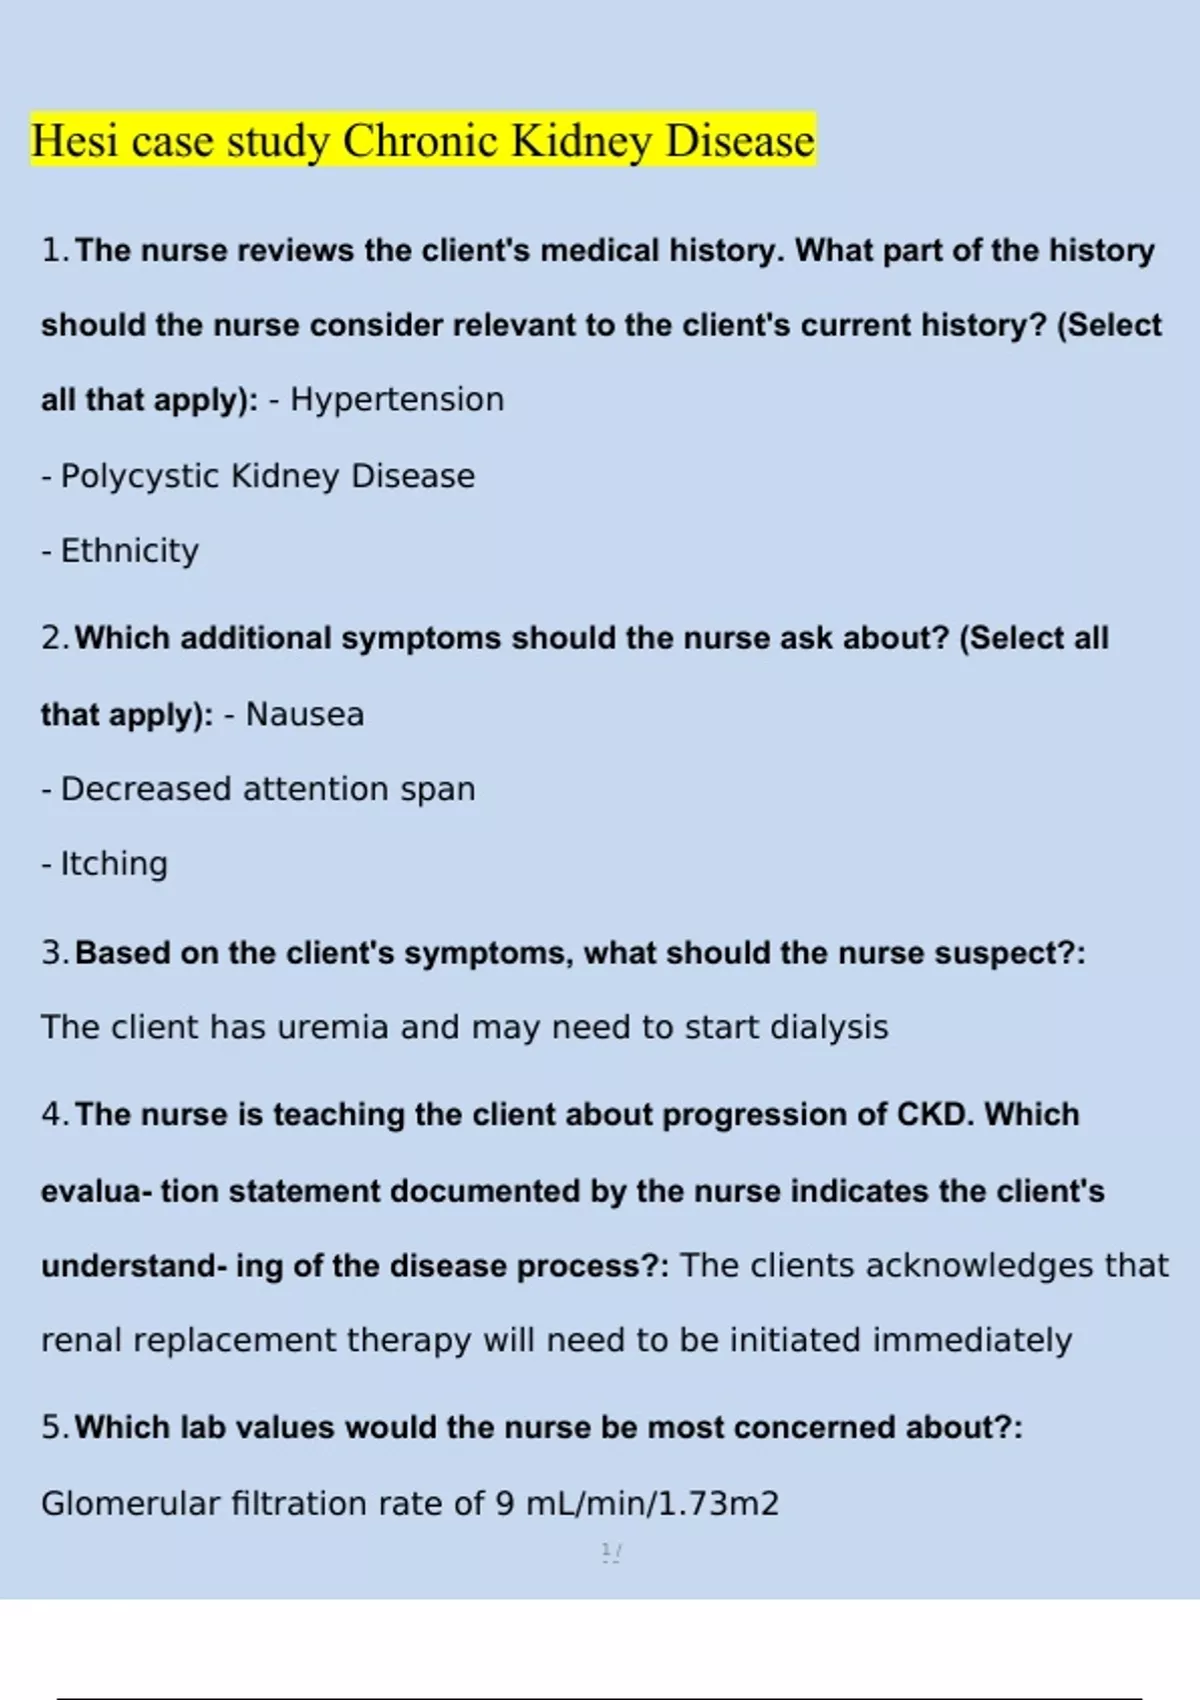 hesi rn case study chronic kidney disease